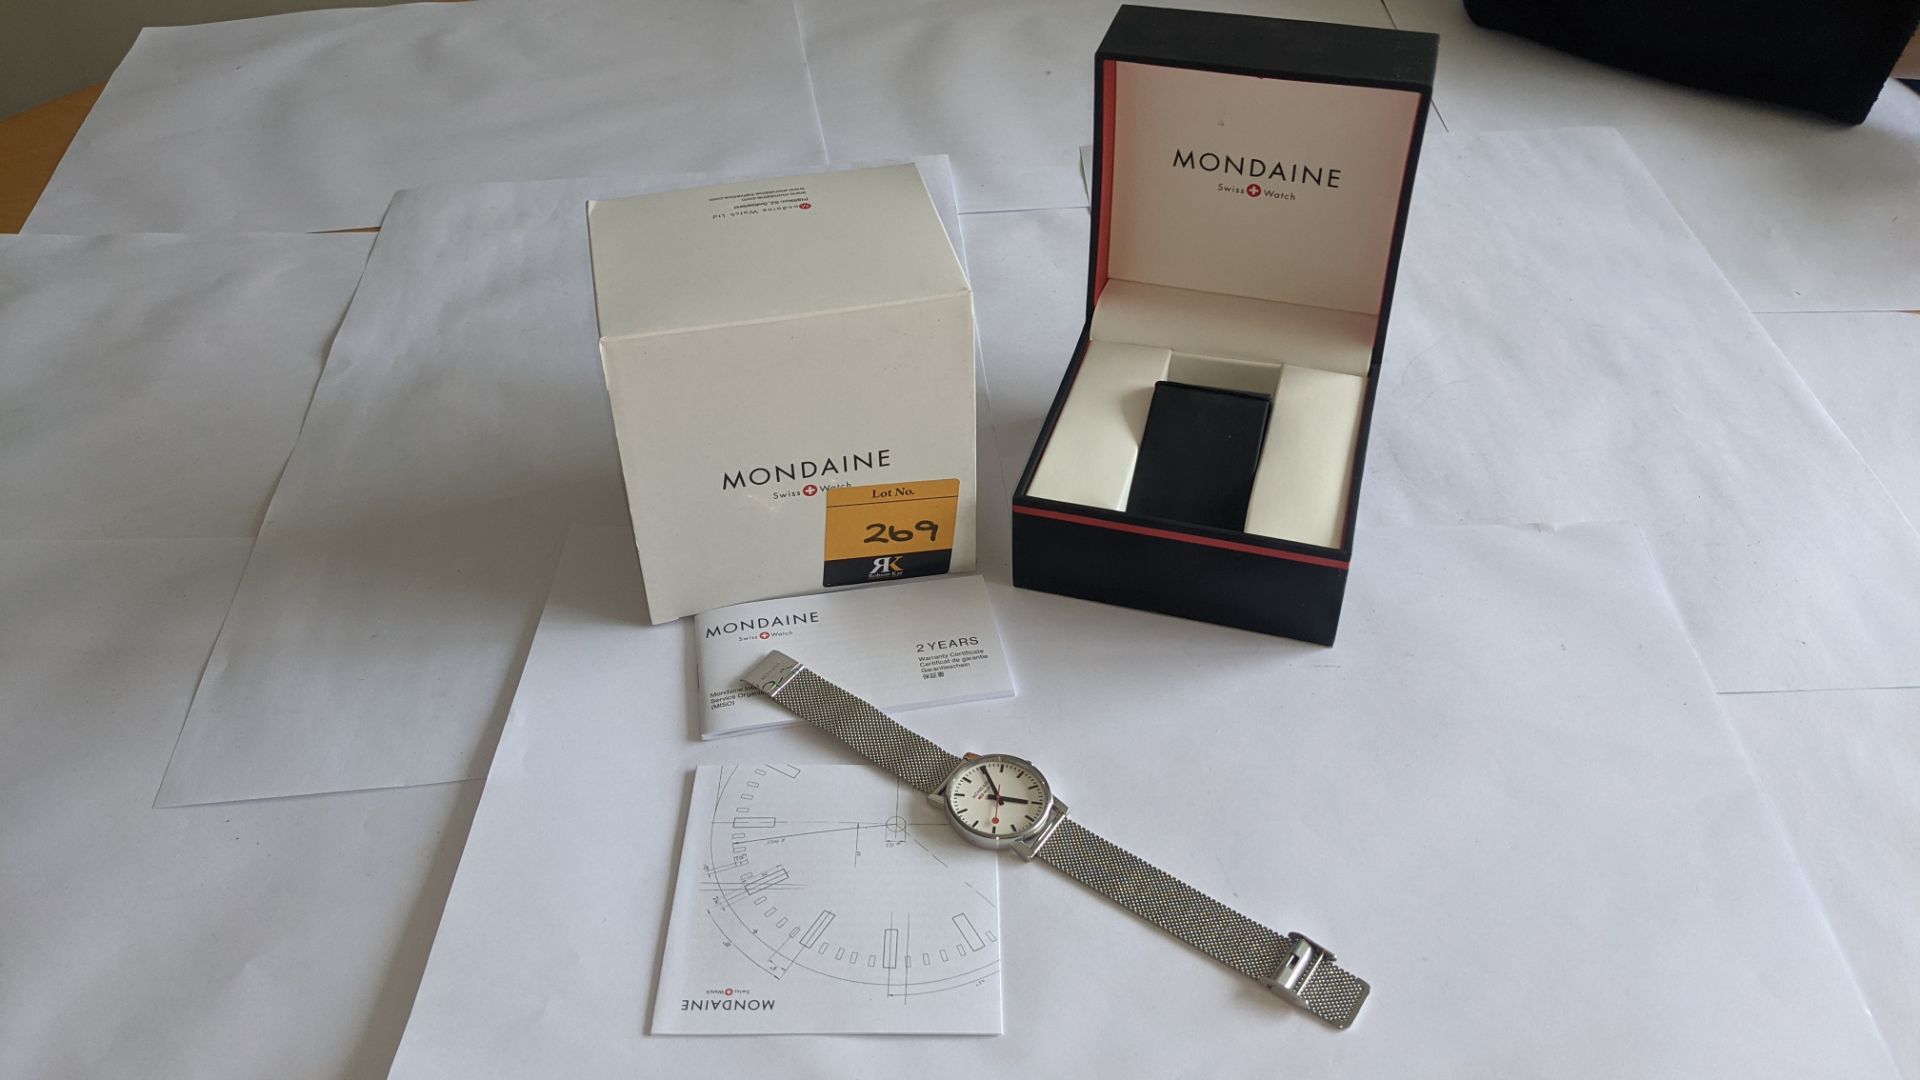 Mondaine watch on metal strap. Official Swiss Railways watch. No price tag. Stainless steel case, wa